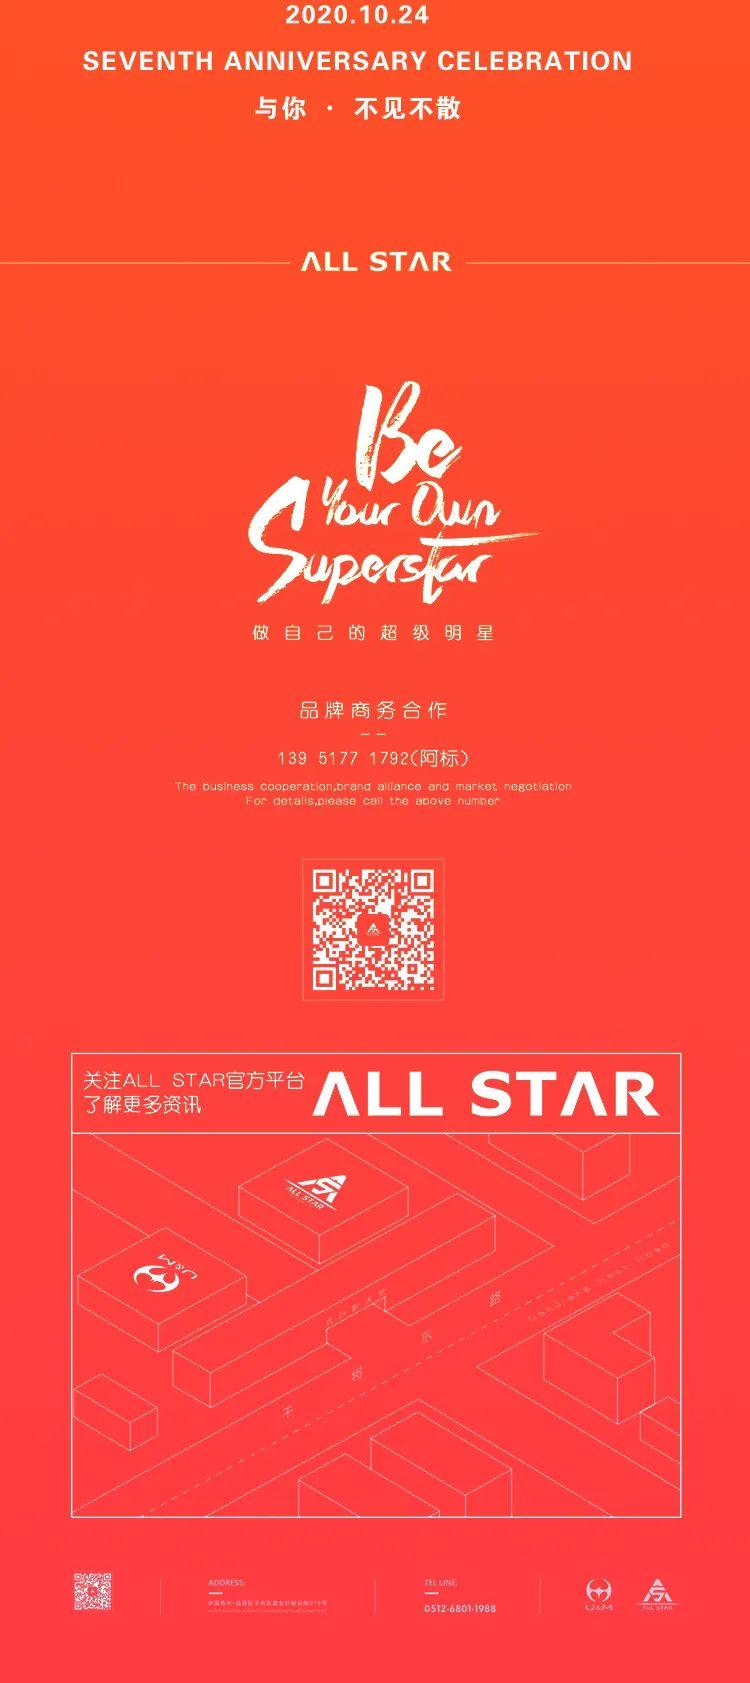 ALL STAR丨柒周年庆-歌手 阿冗/你的答案-苏州ALL STAR CLUB （全明星酒吧）苏州